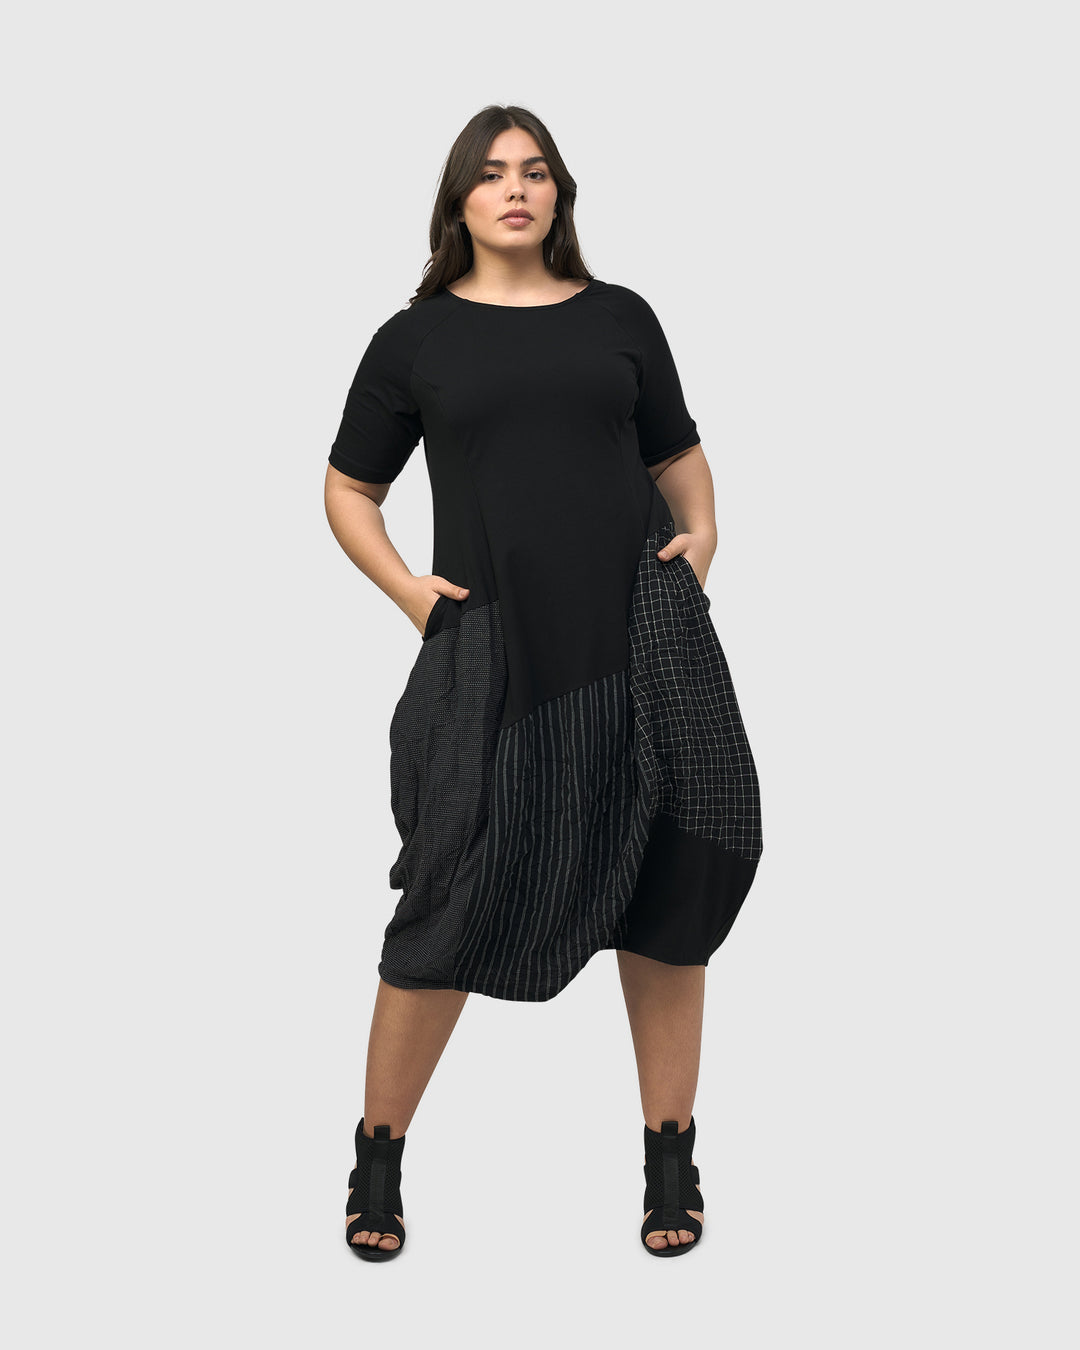 Hera T-Shirt Cocoon Dress, Mix